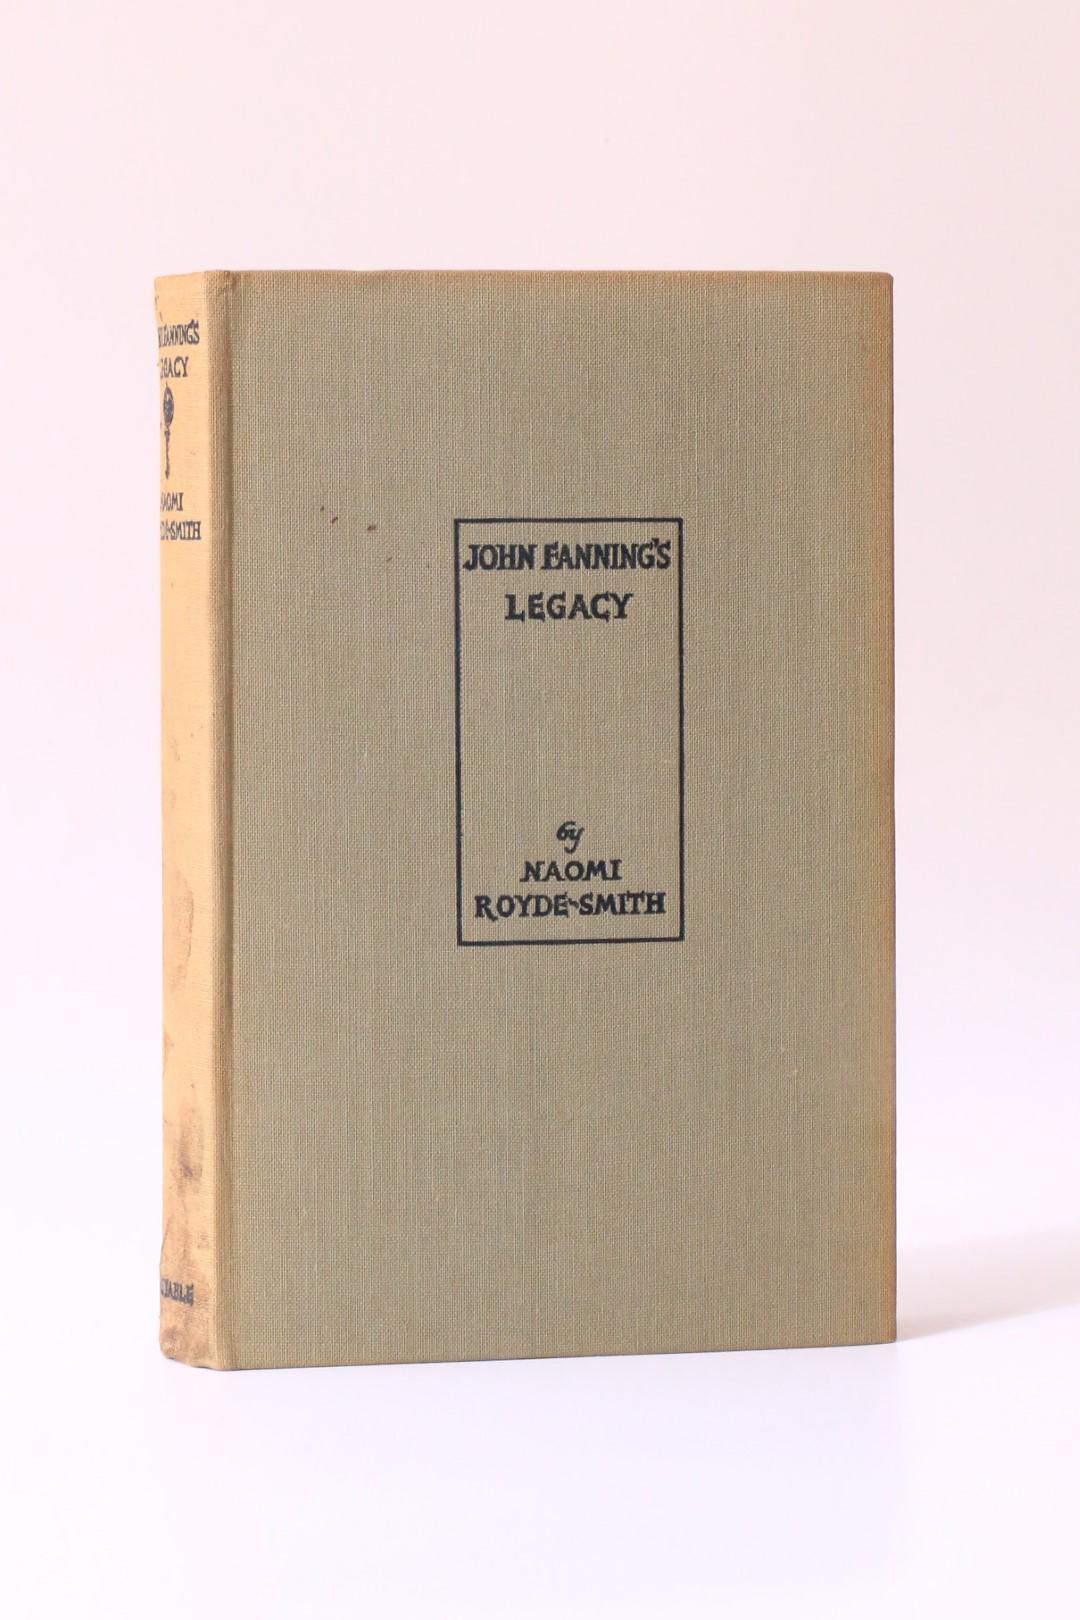 Naomi Royde-Smith - John Fanning's Legacy - Constable, 1927, First Edition.